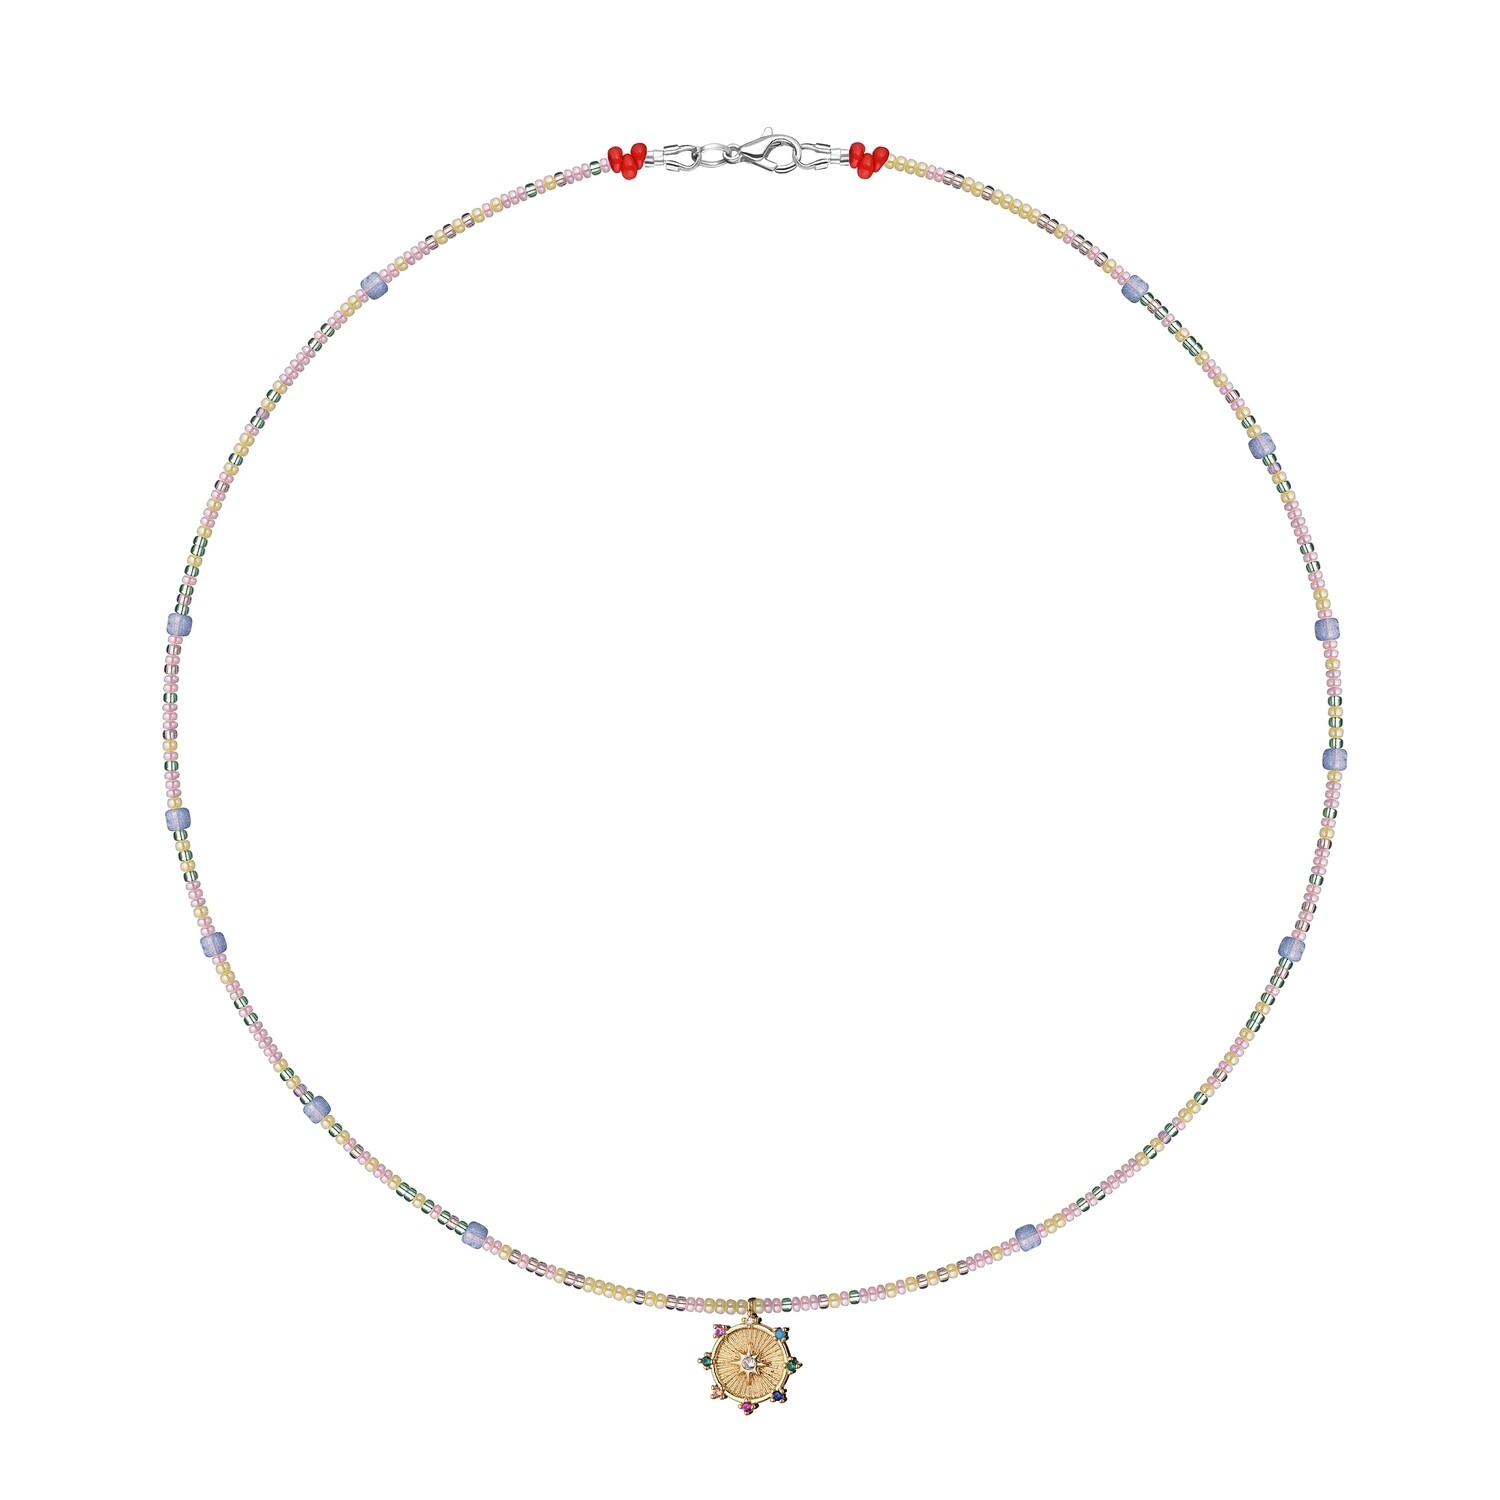 Rainbow Beads Necklace with Eye Pendant